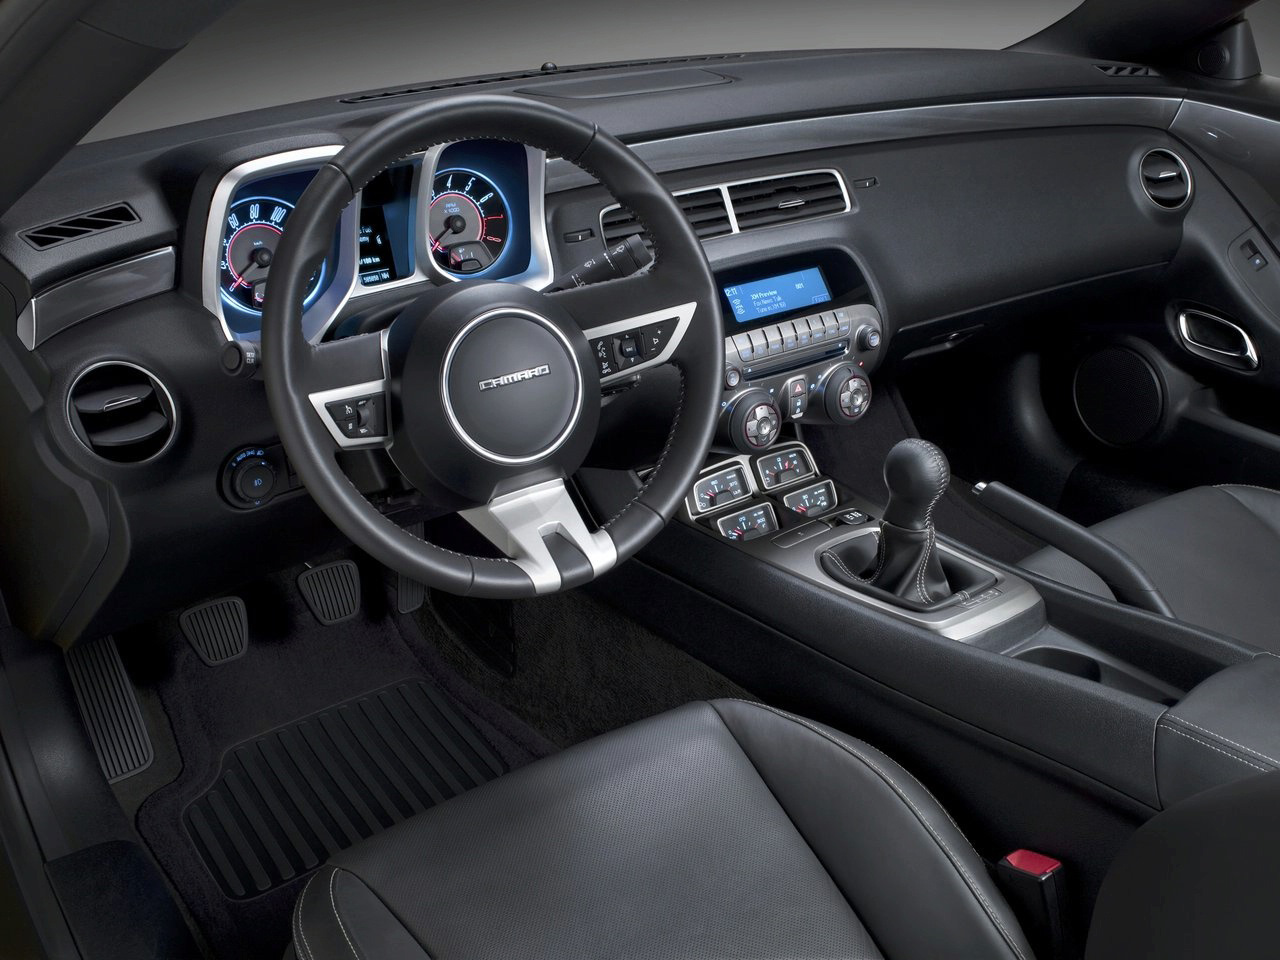 2016 Chevrolet Camaro interior dashboard luxury